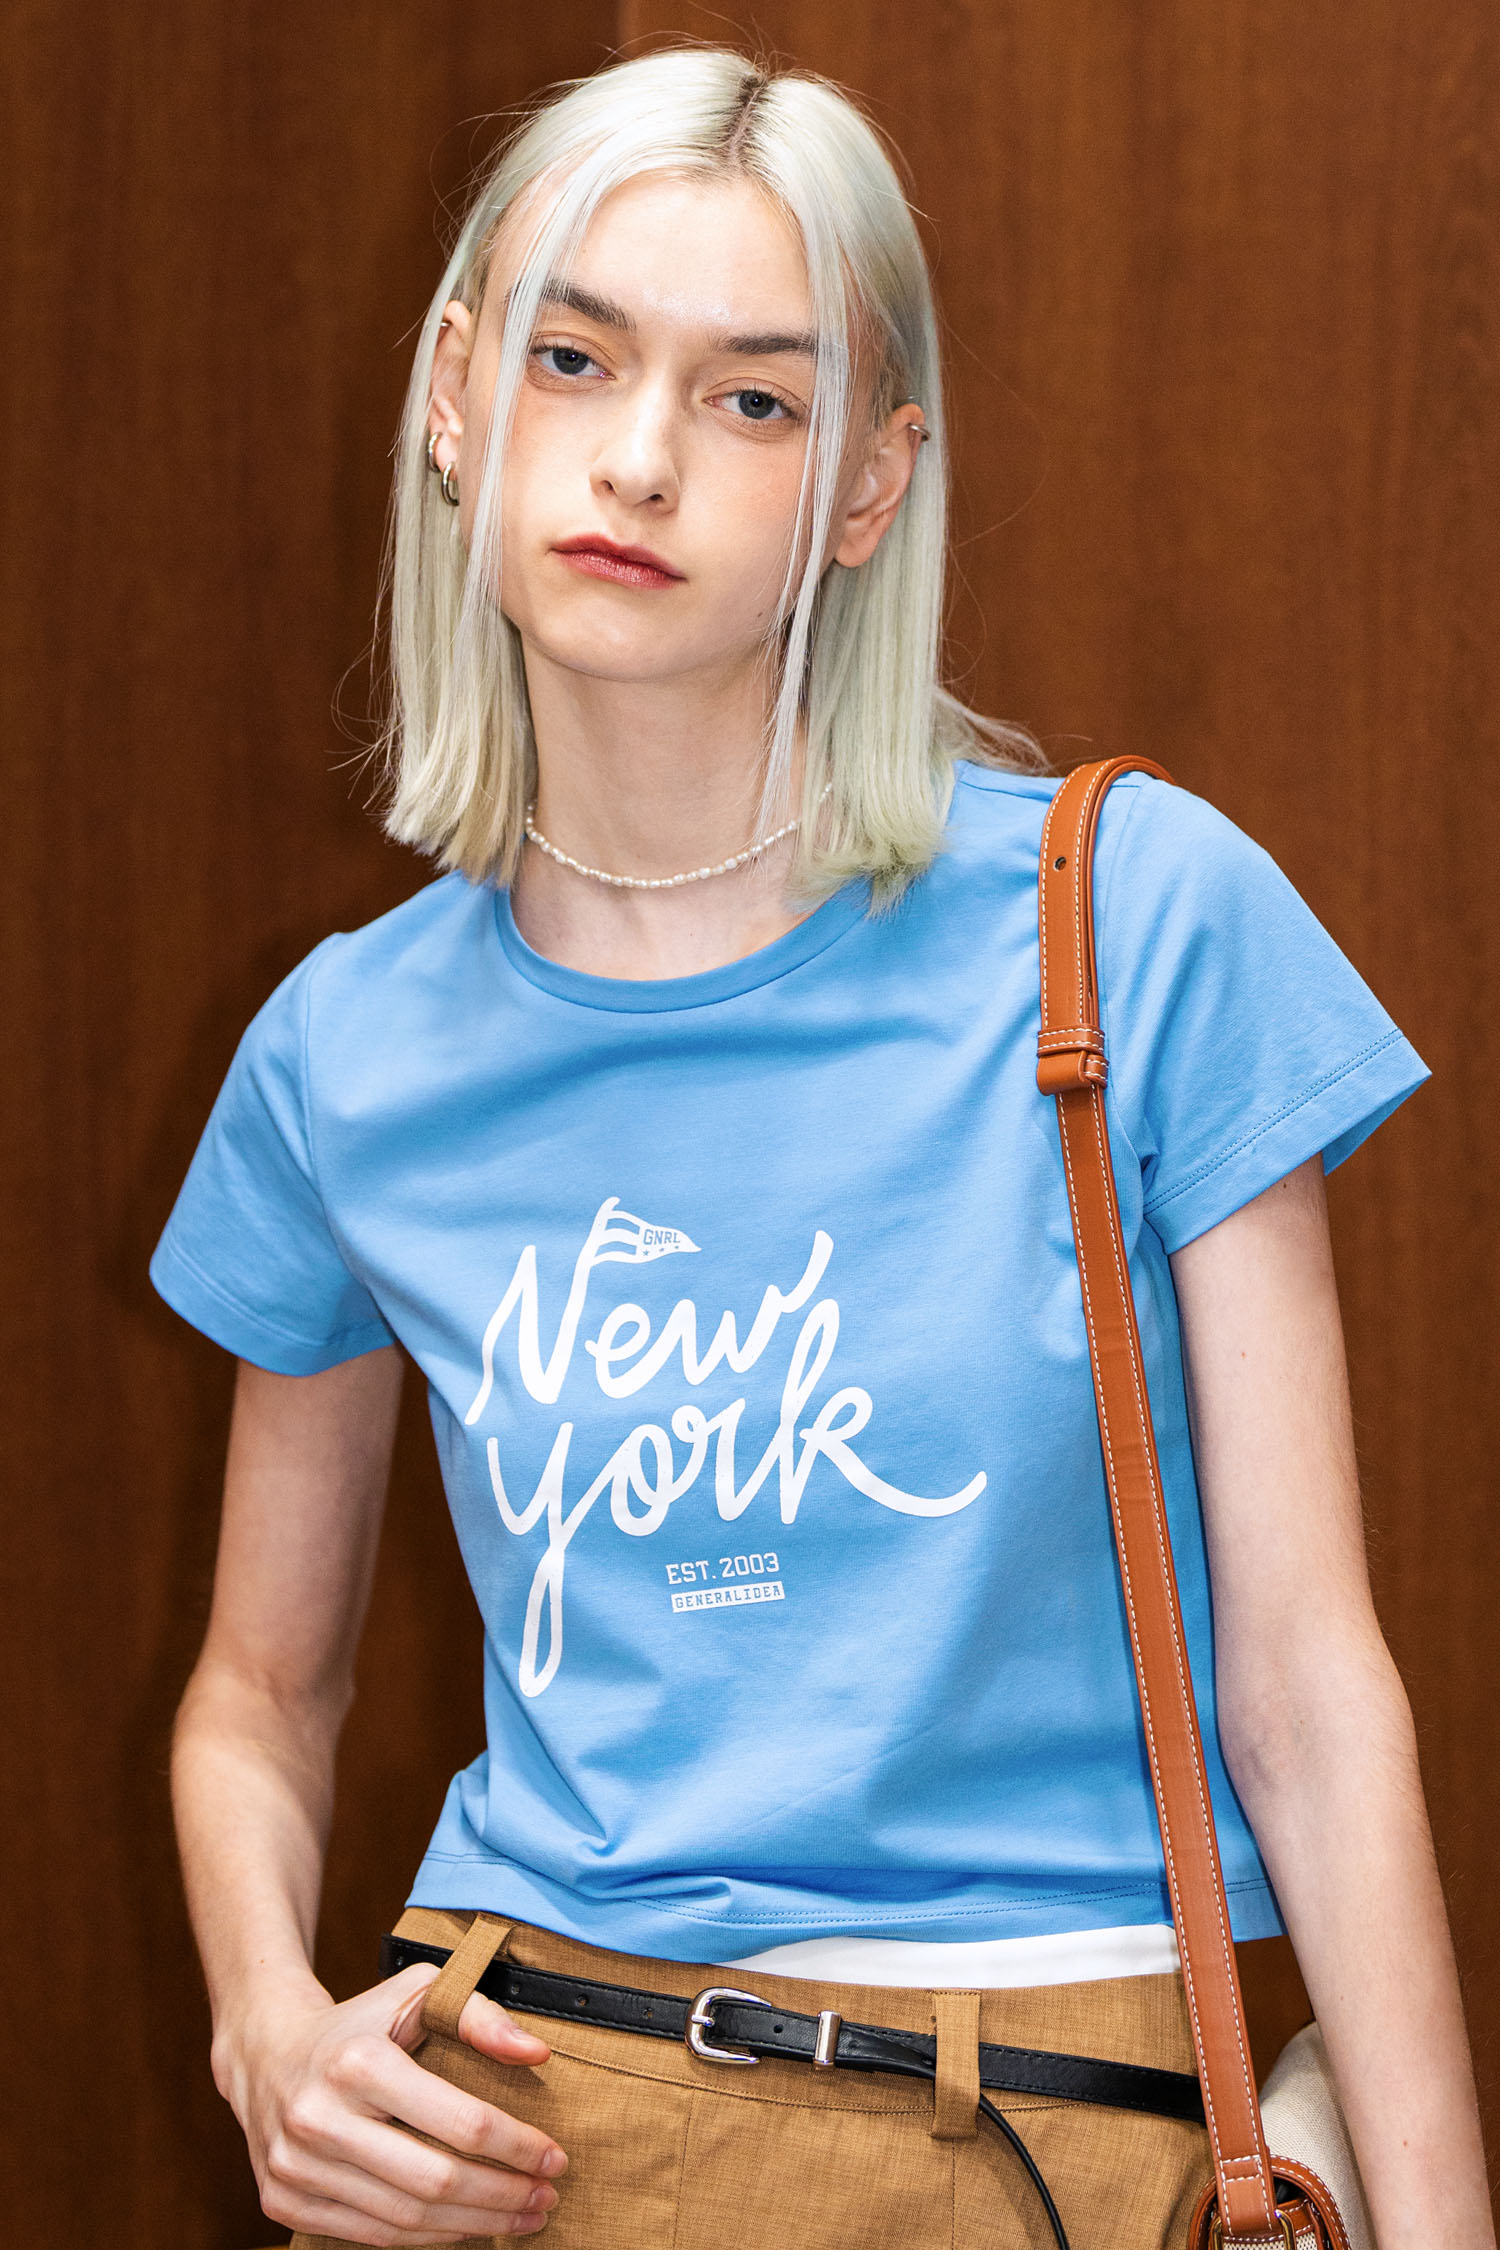 WOMAN 2003 뉴욕 크롭 반팔 티셔츠 [BLUE]